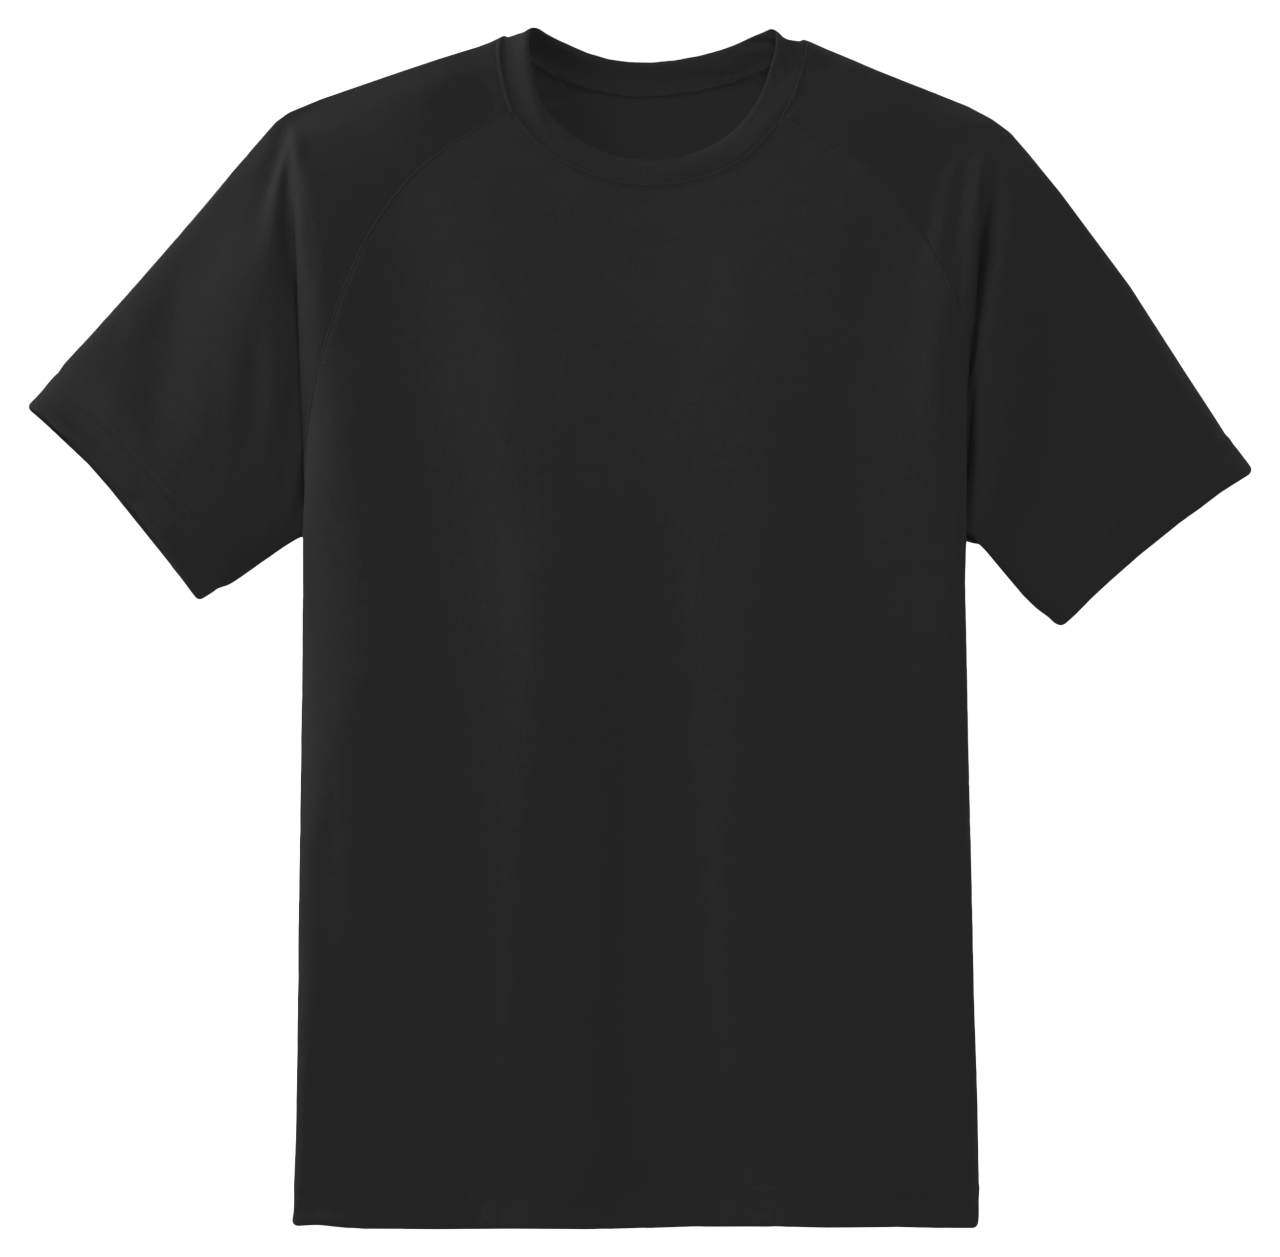 Download Black T Shirt PNG Image - PurePNG | Free transparent CC0 ...